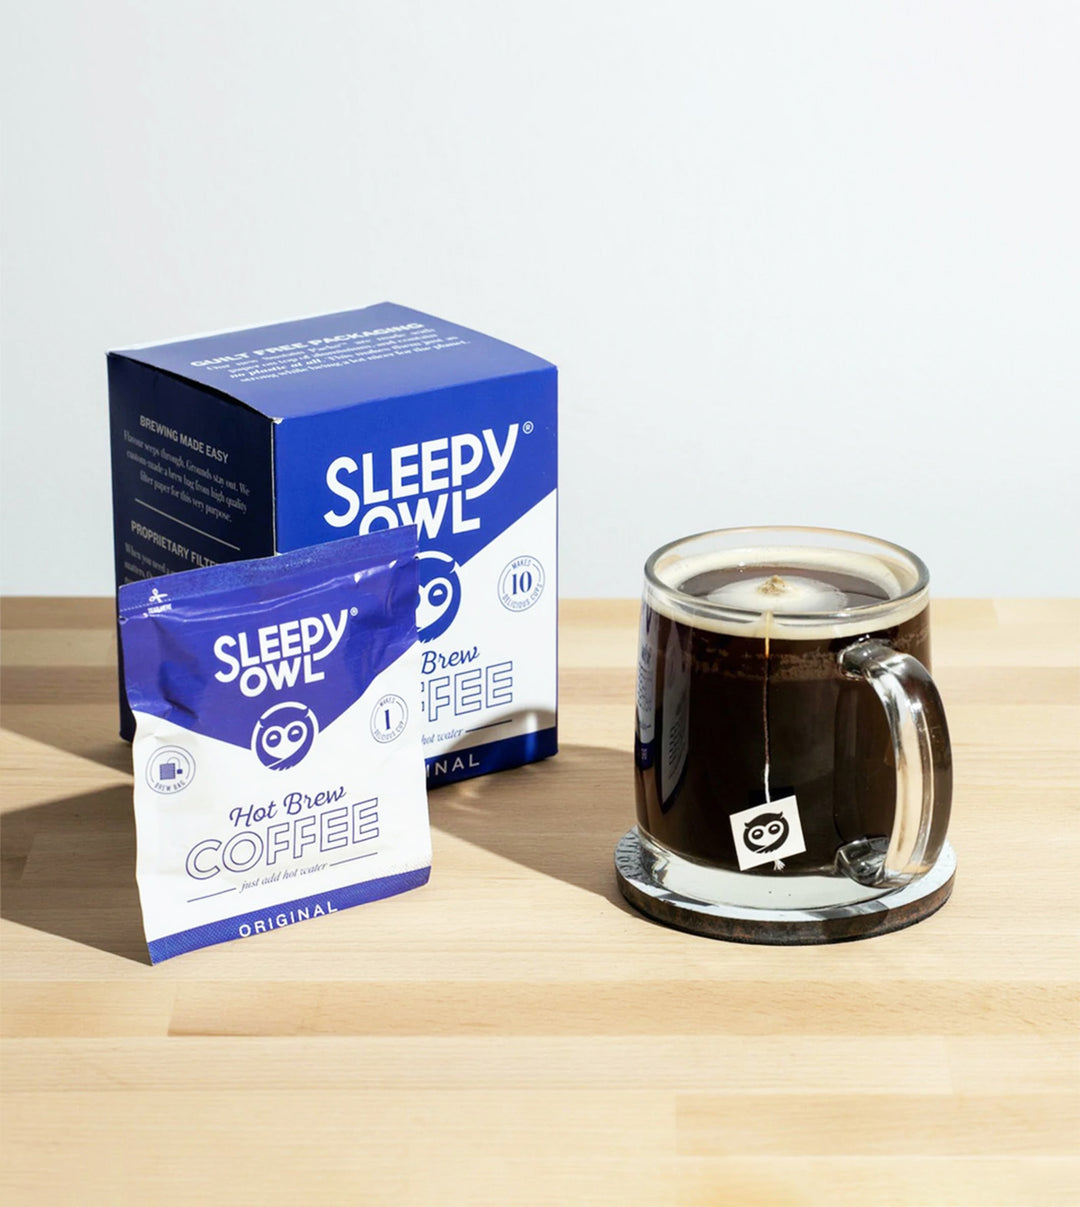 Buy No Spill Mug Online in India  Sleepy Owl – Sleepy Owl Coffee